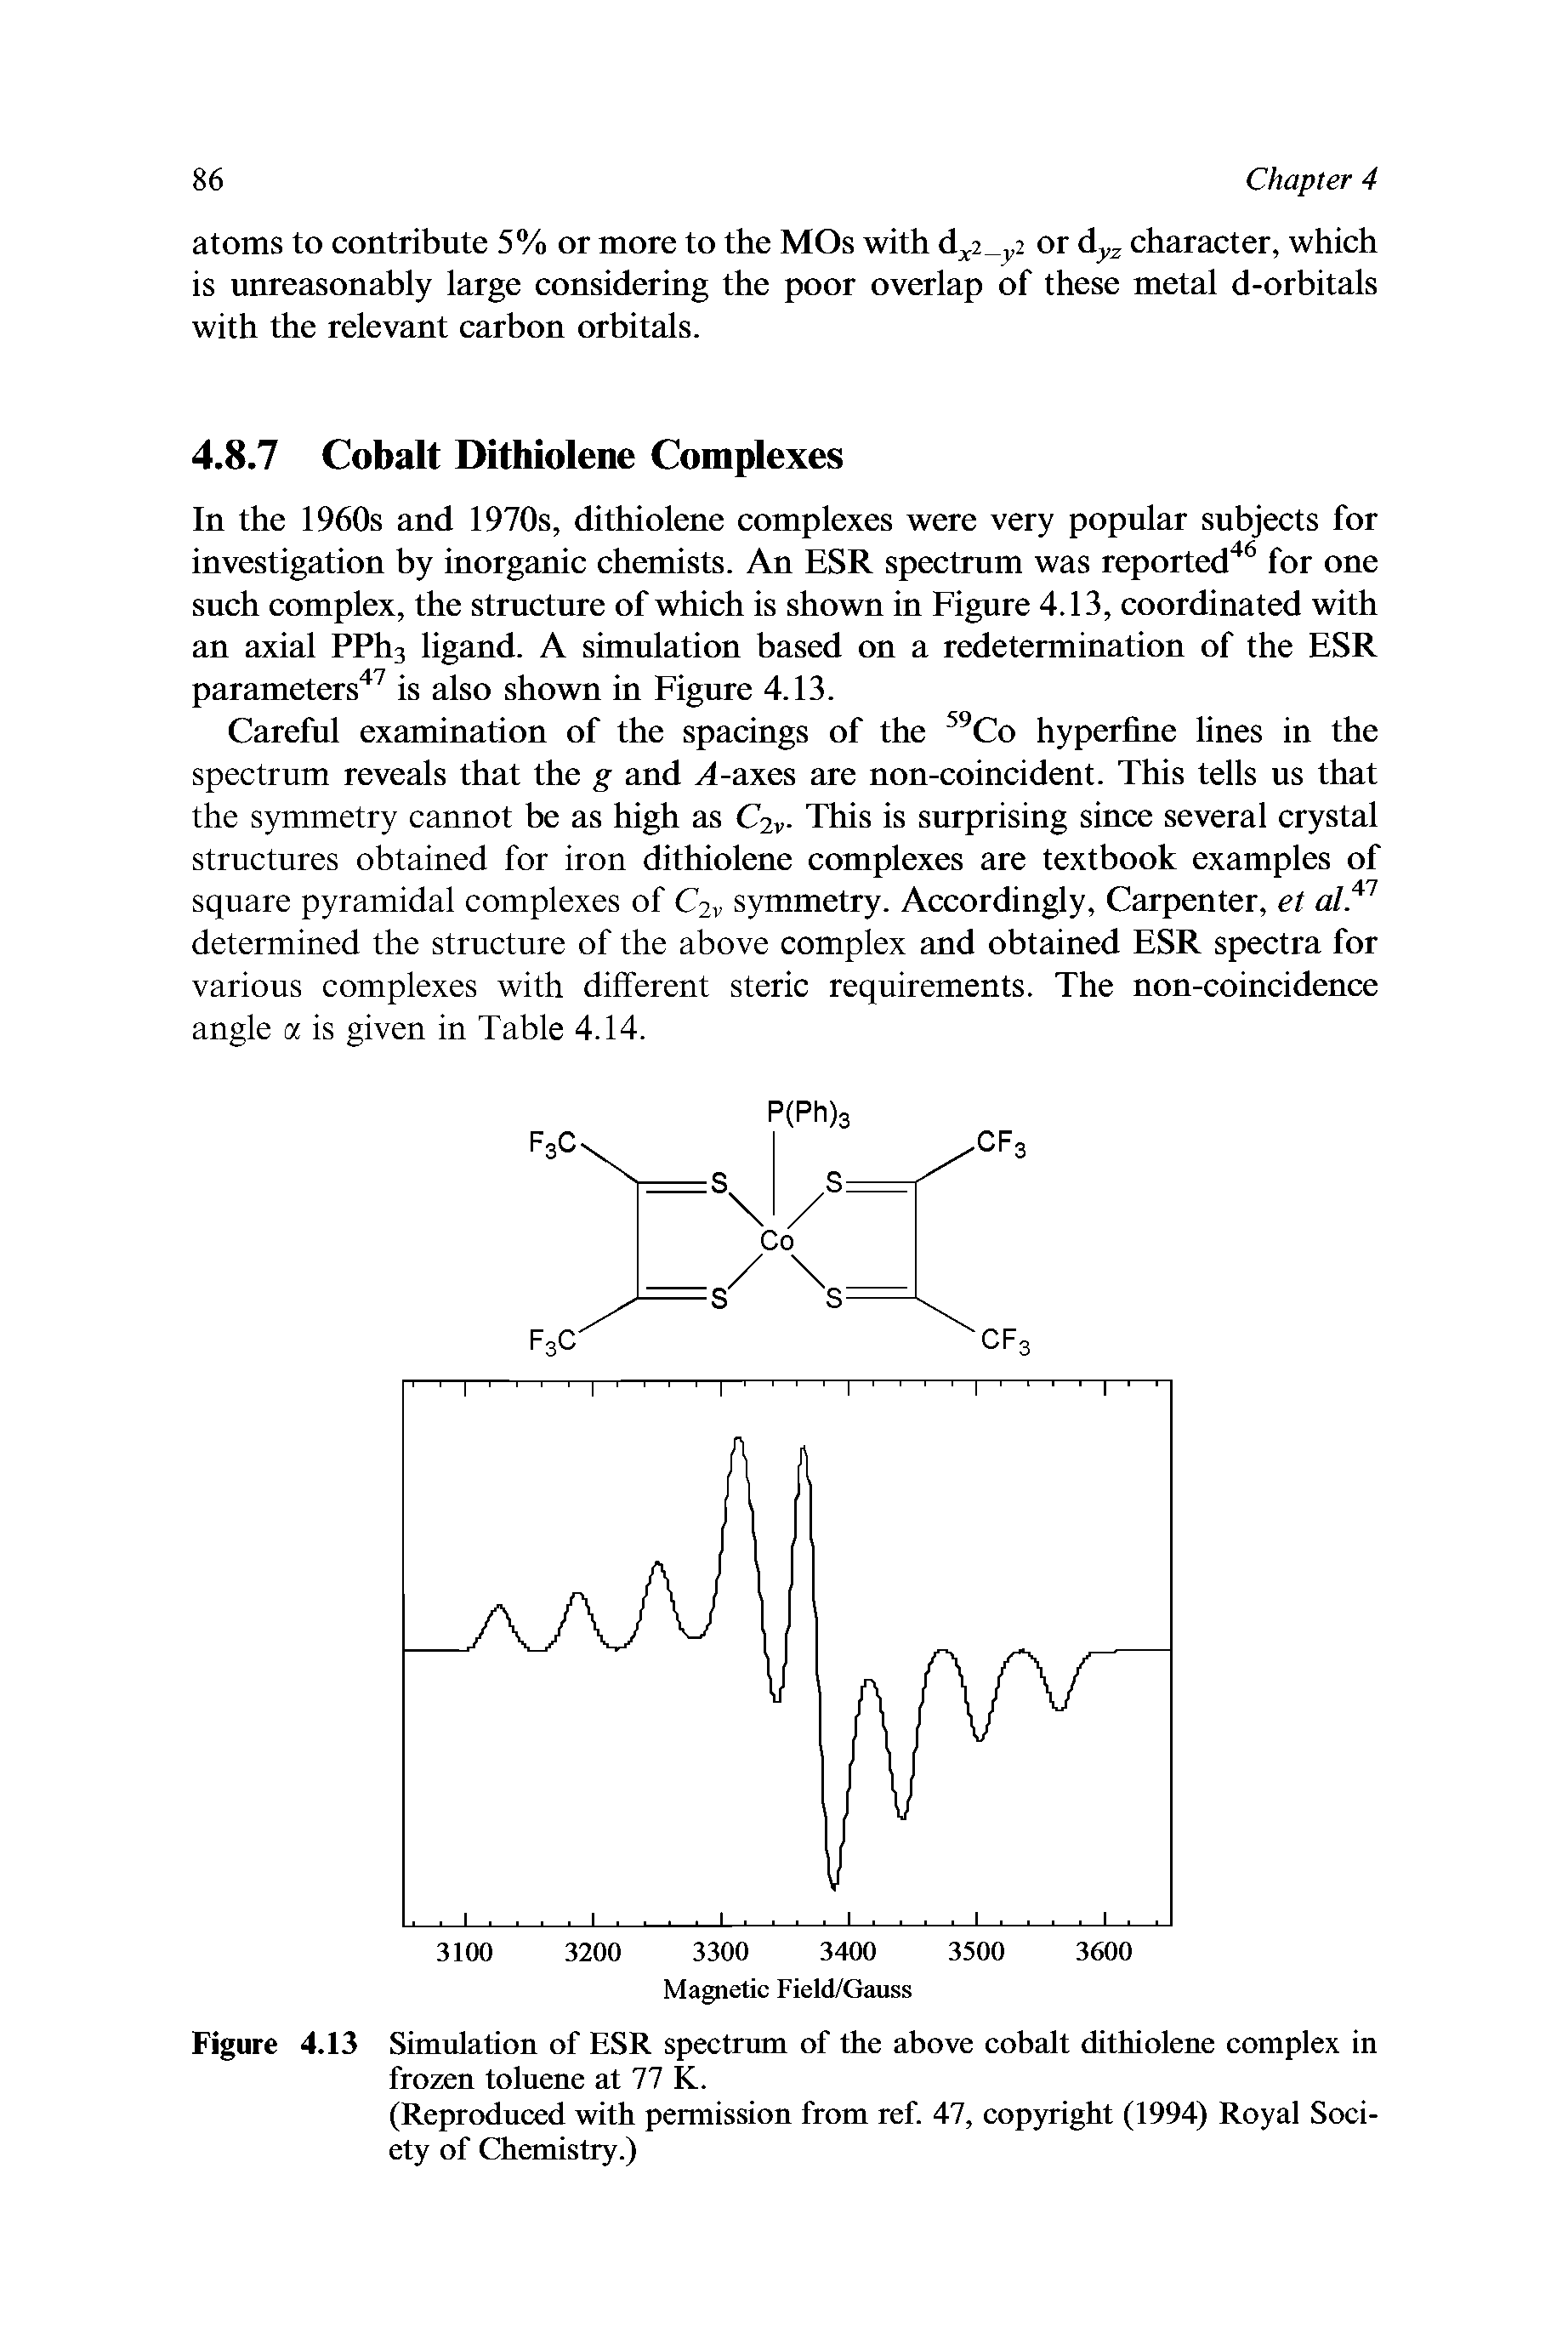 Figure 4.13 Simulation of ESR spectrum of the above cobalt dithiolene complex in frozen toluene at 77 K.